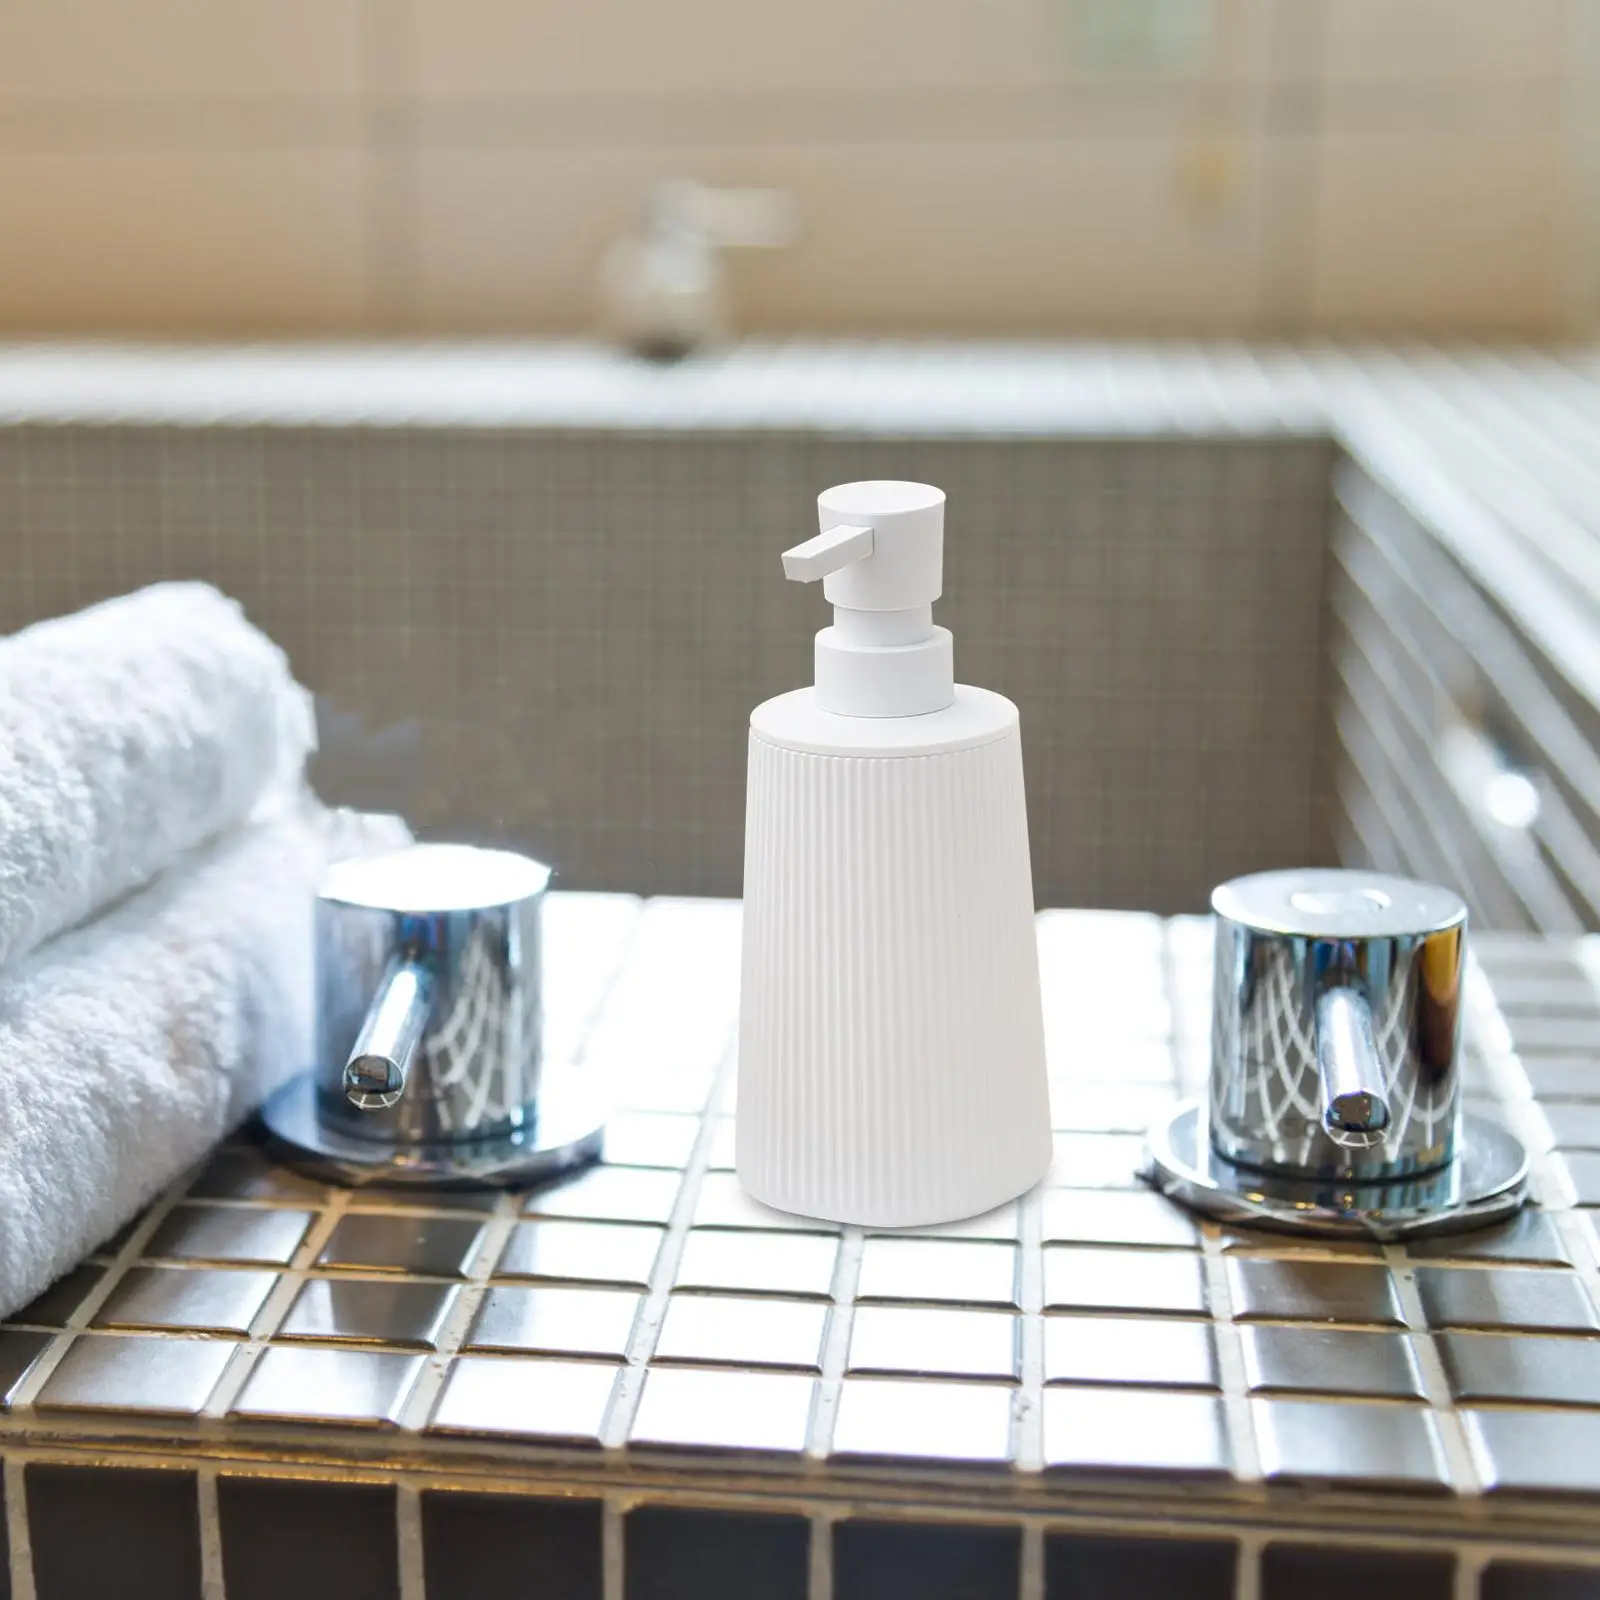 Liquid Soap Dispenser Empty Pump Lotion for Body Wash Moisturizer Countertop